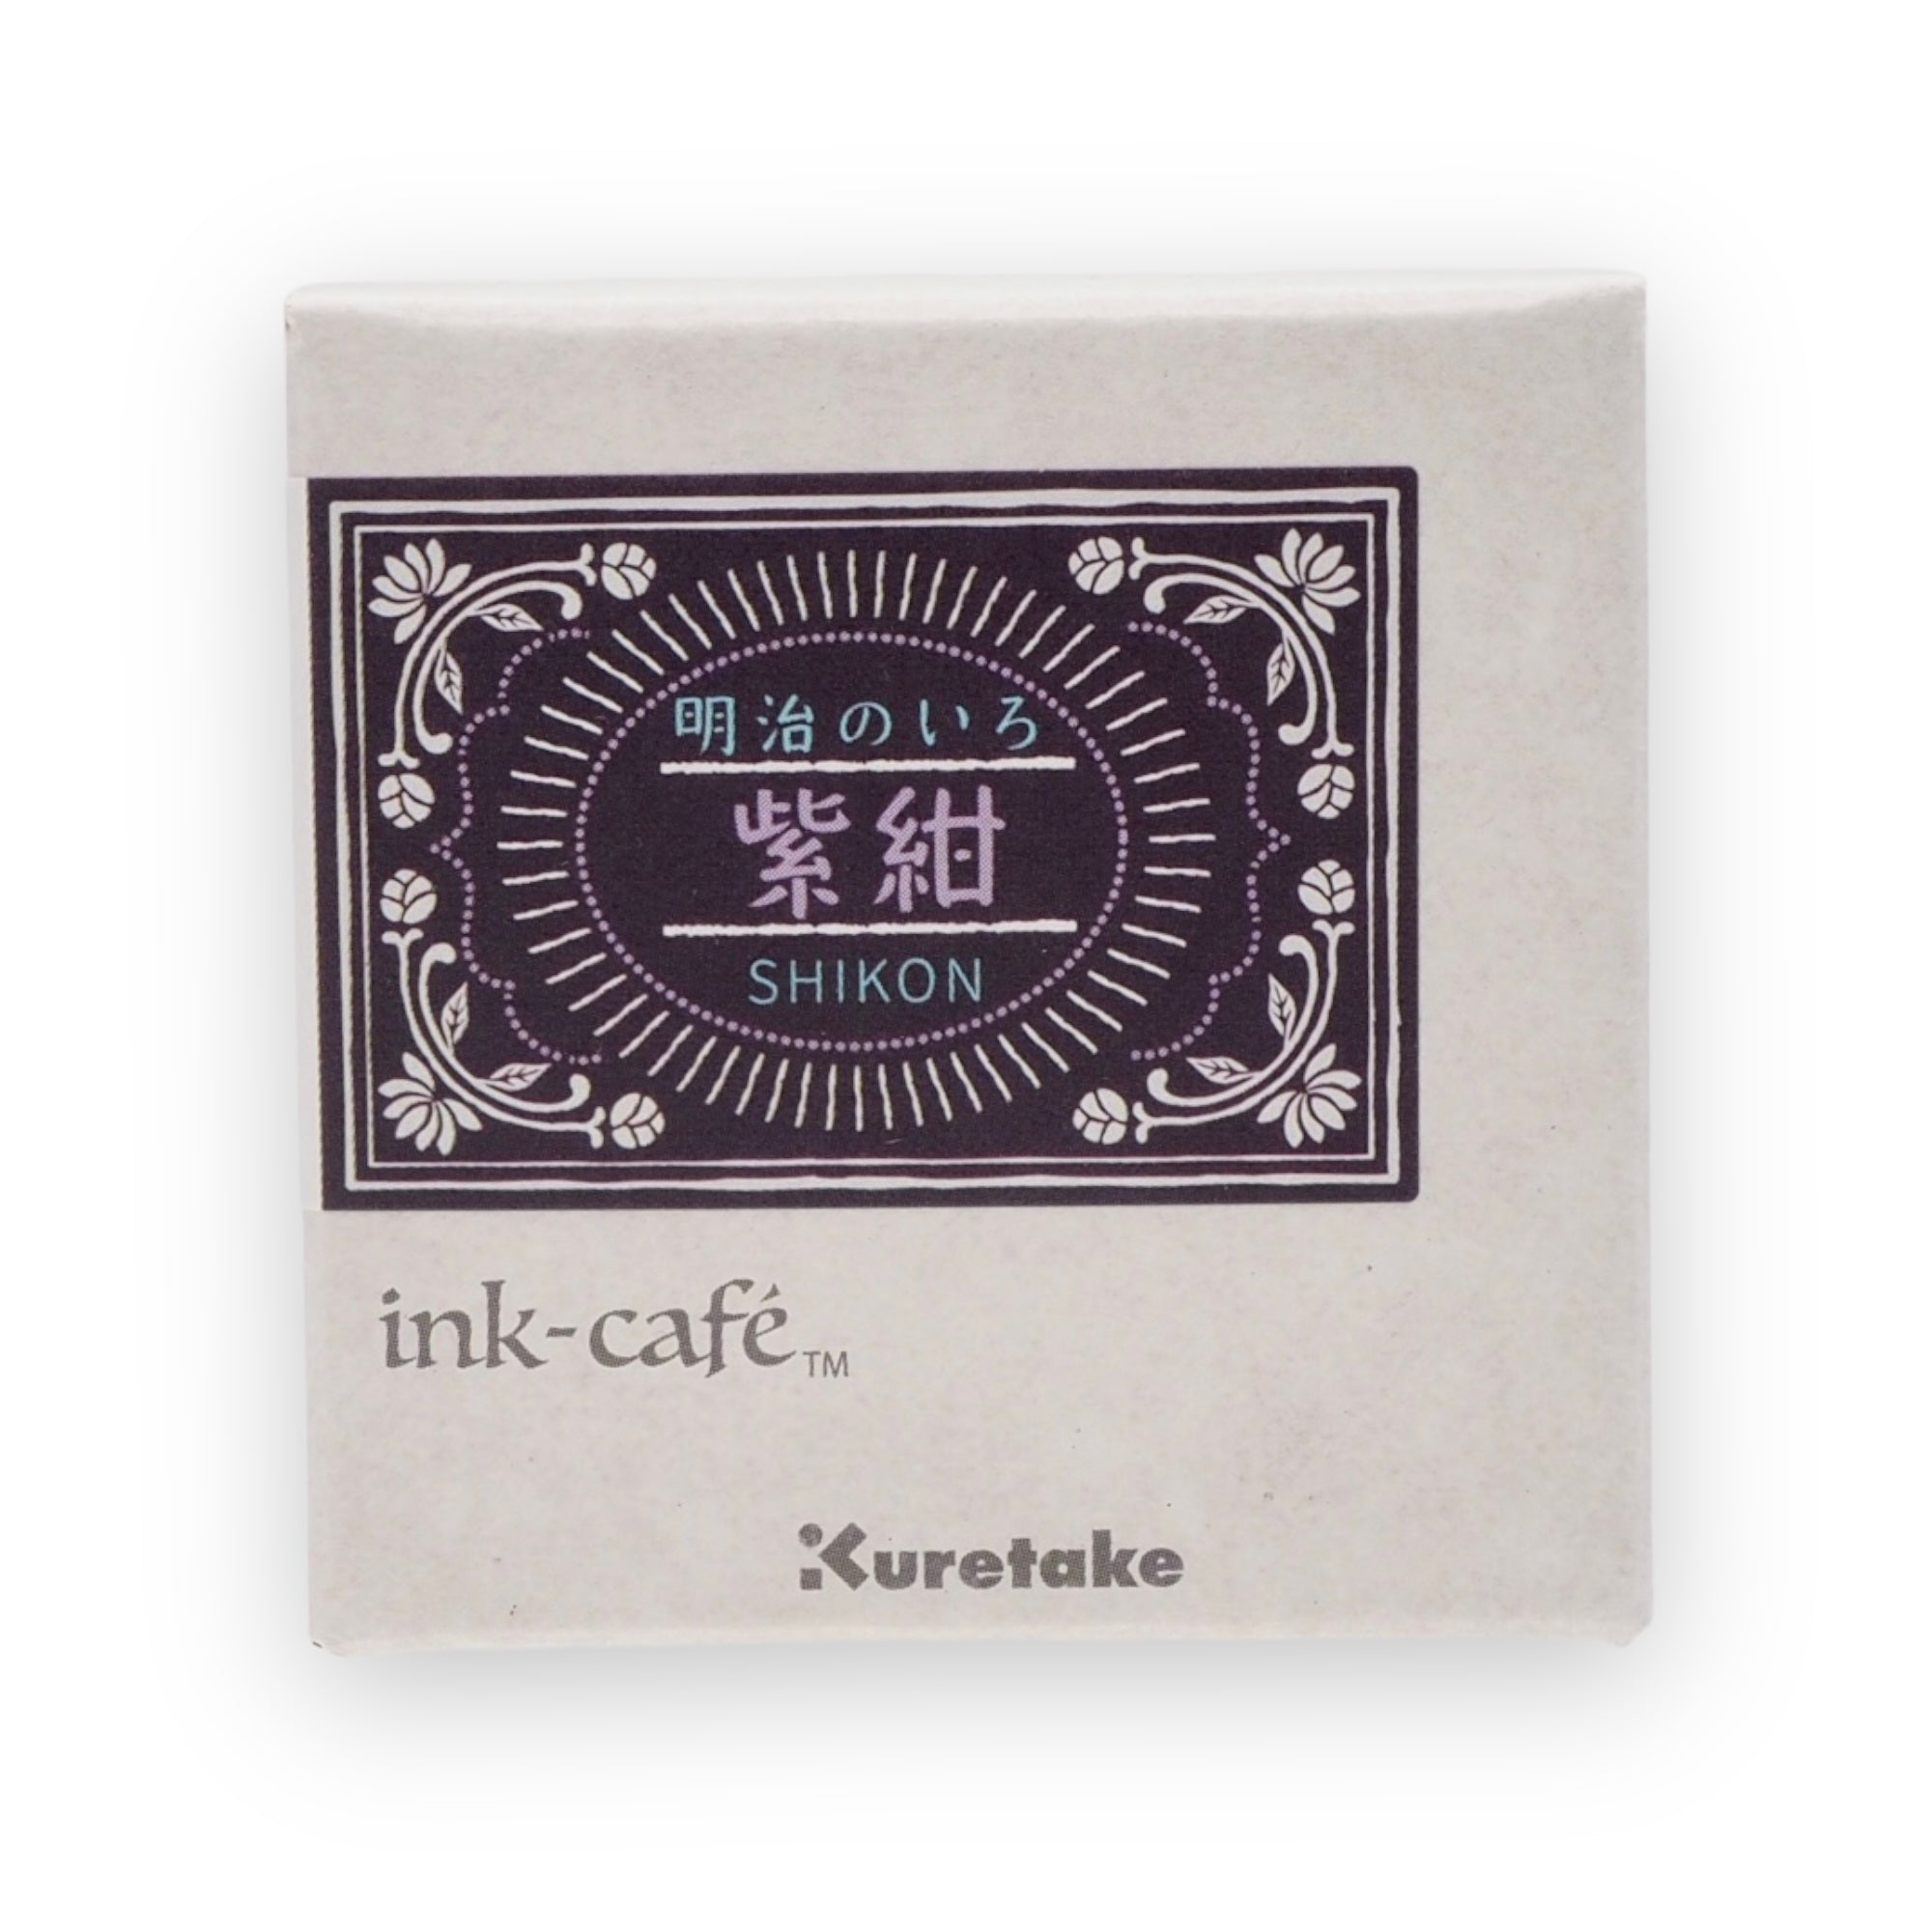 Kuretake - Ink Cafe Shikon